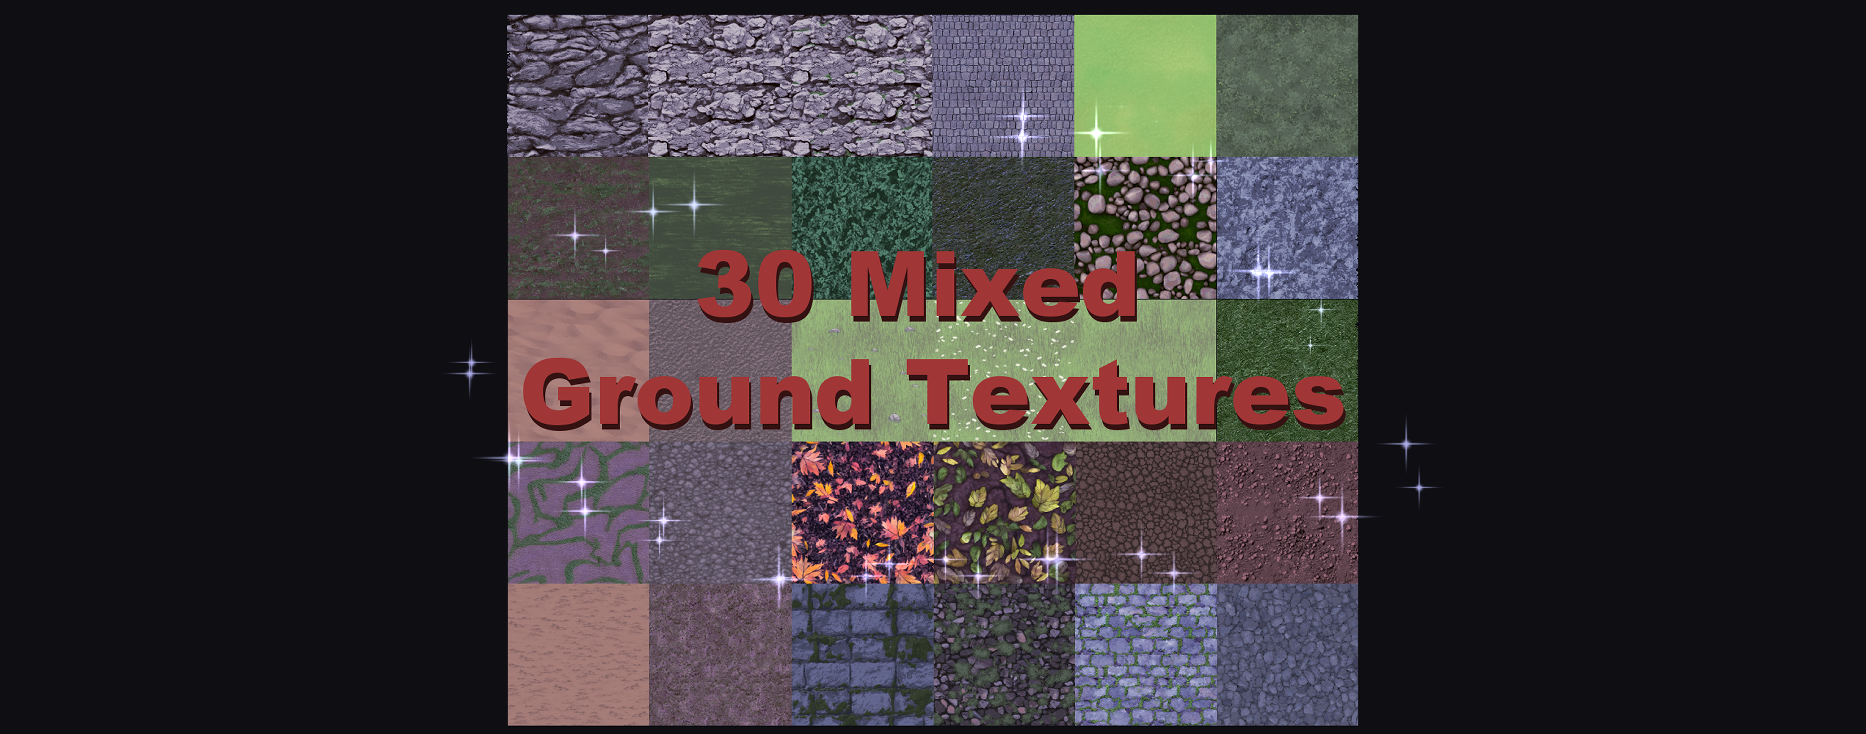 Ground Texture Mix Pack